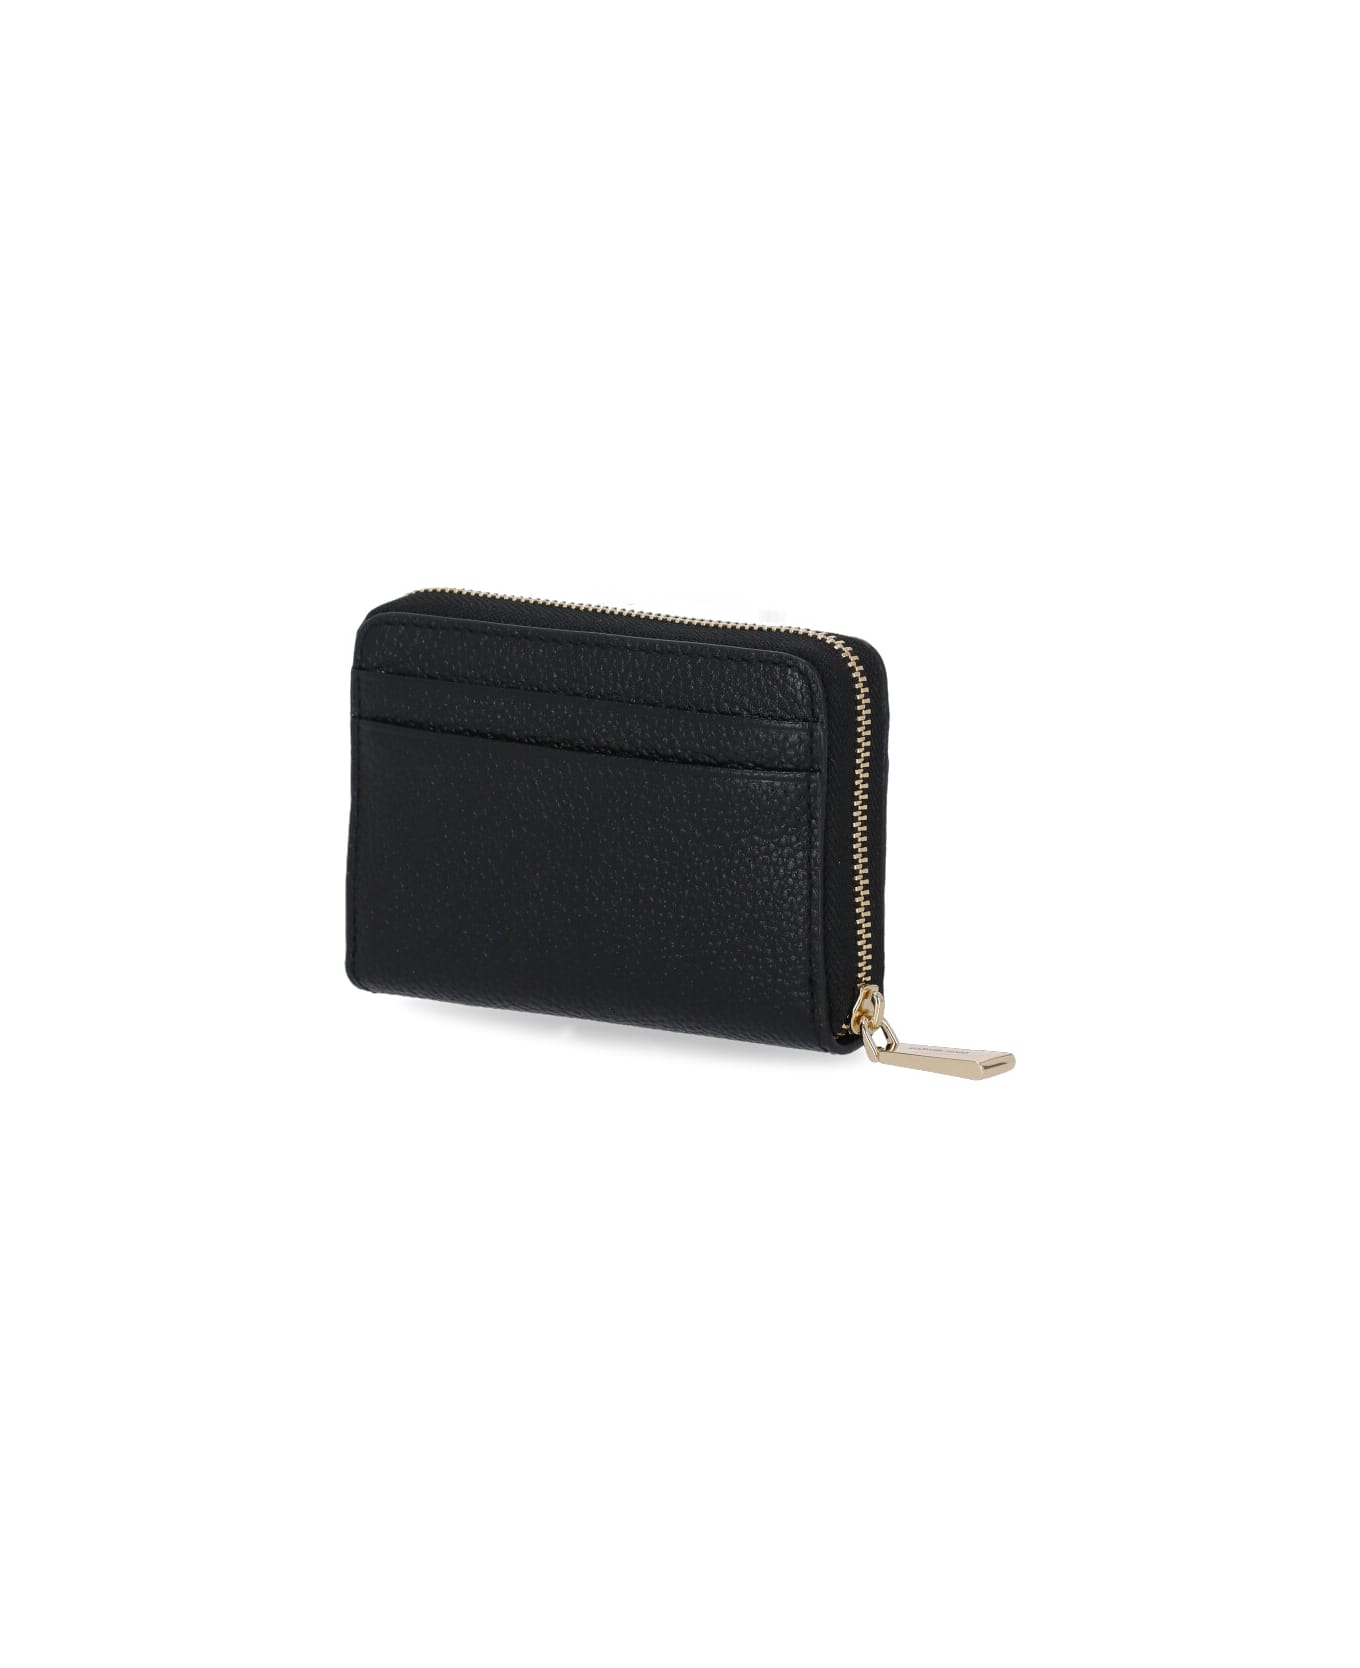 Michael Kors Grainy Leather Wallet - BLACK 財布